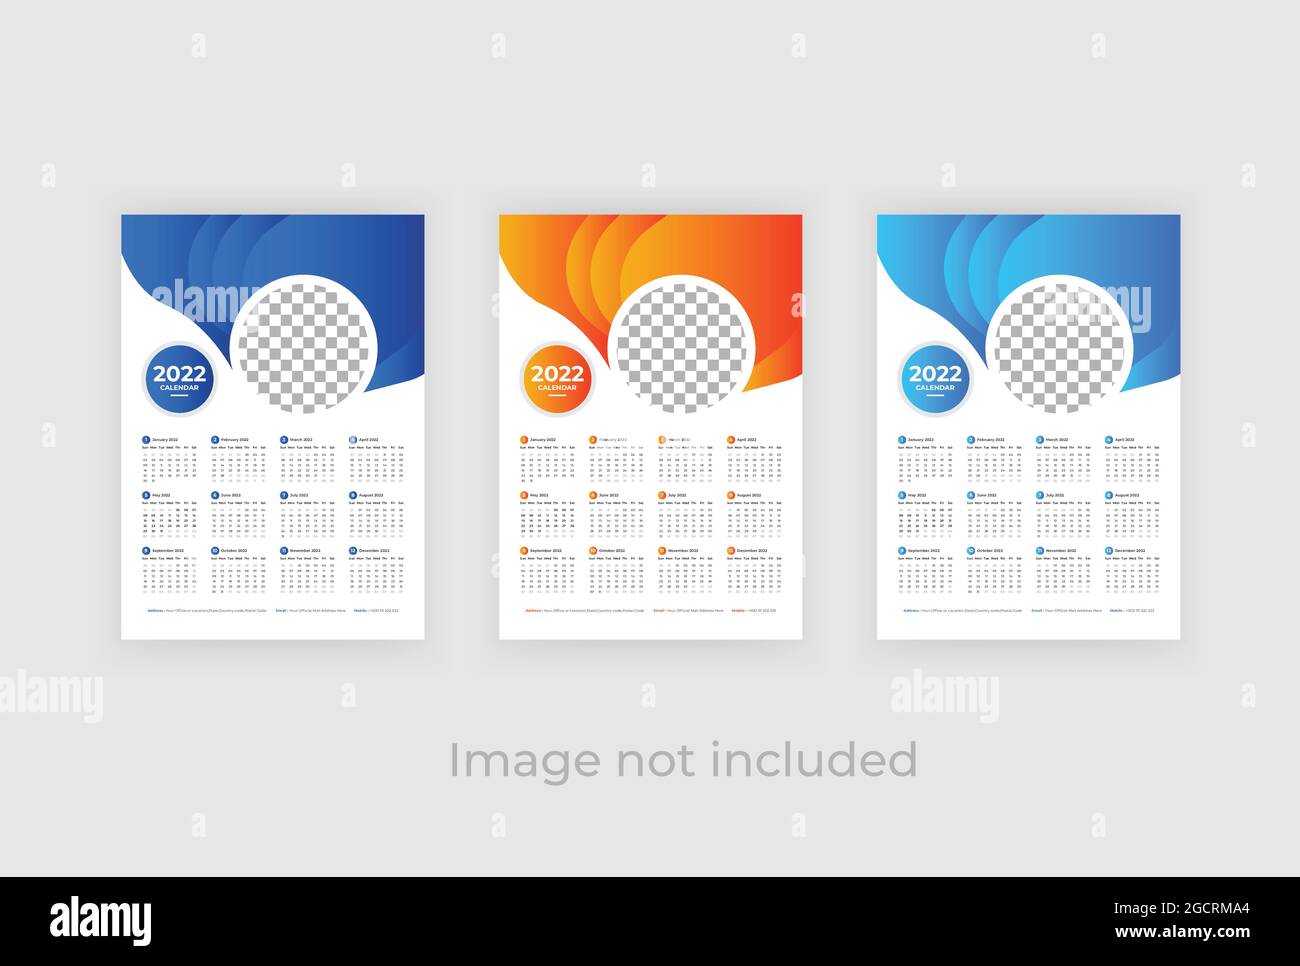 Colorful Business Calendar Template Premium Vector Design Stock Vector